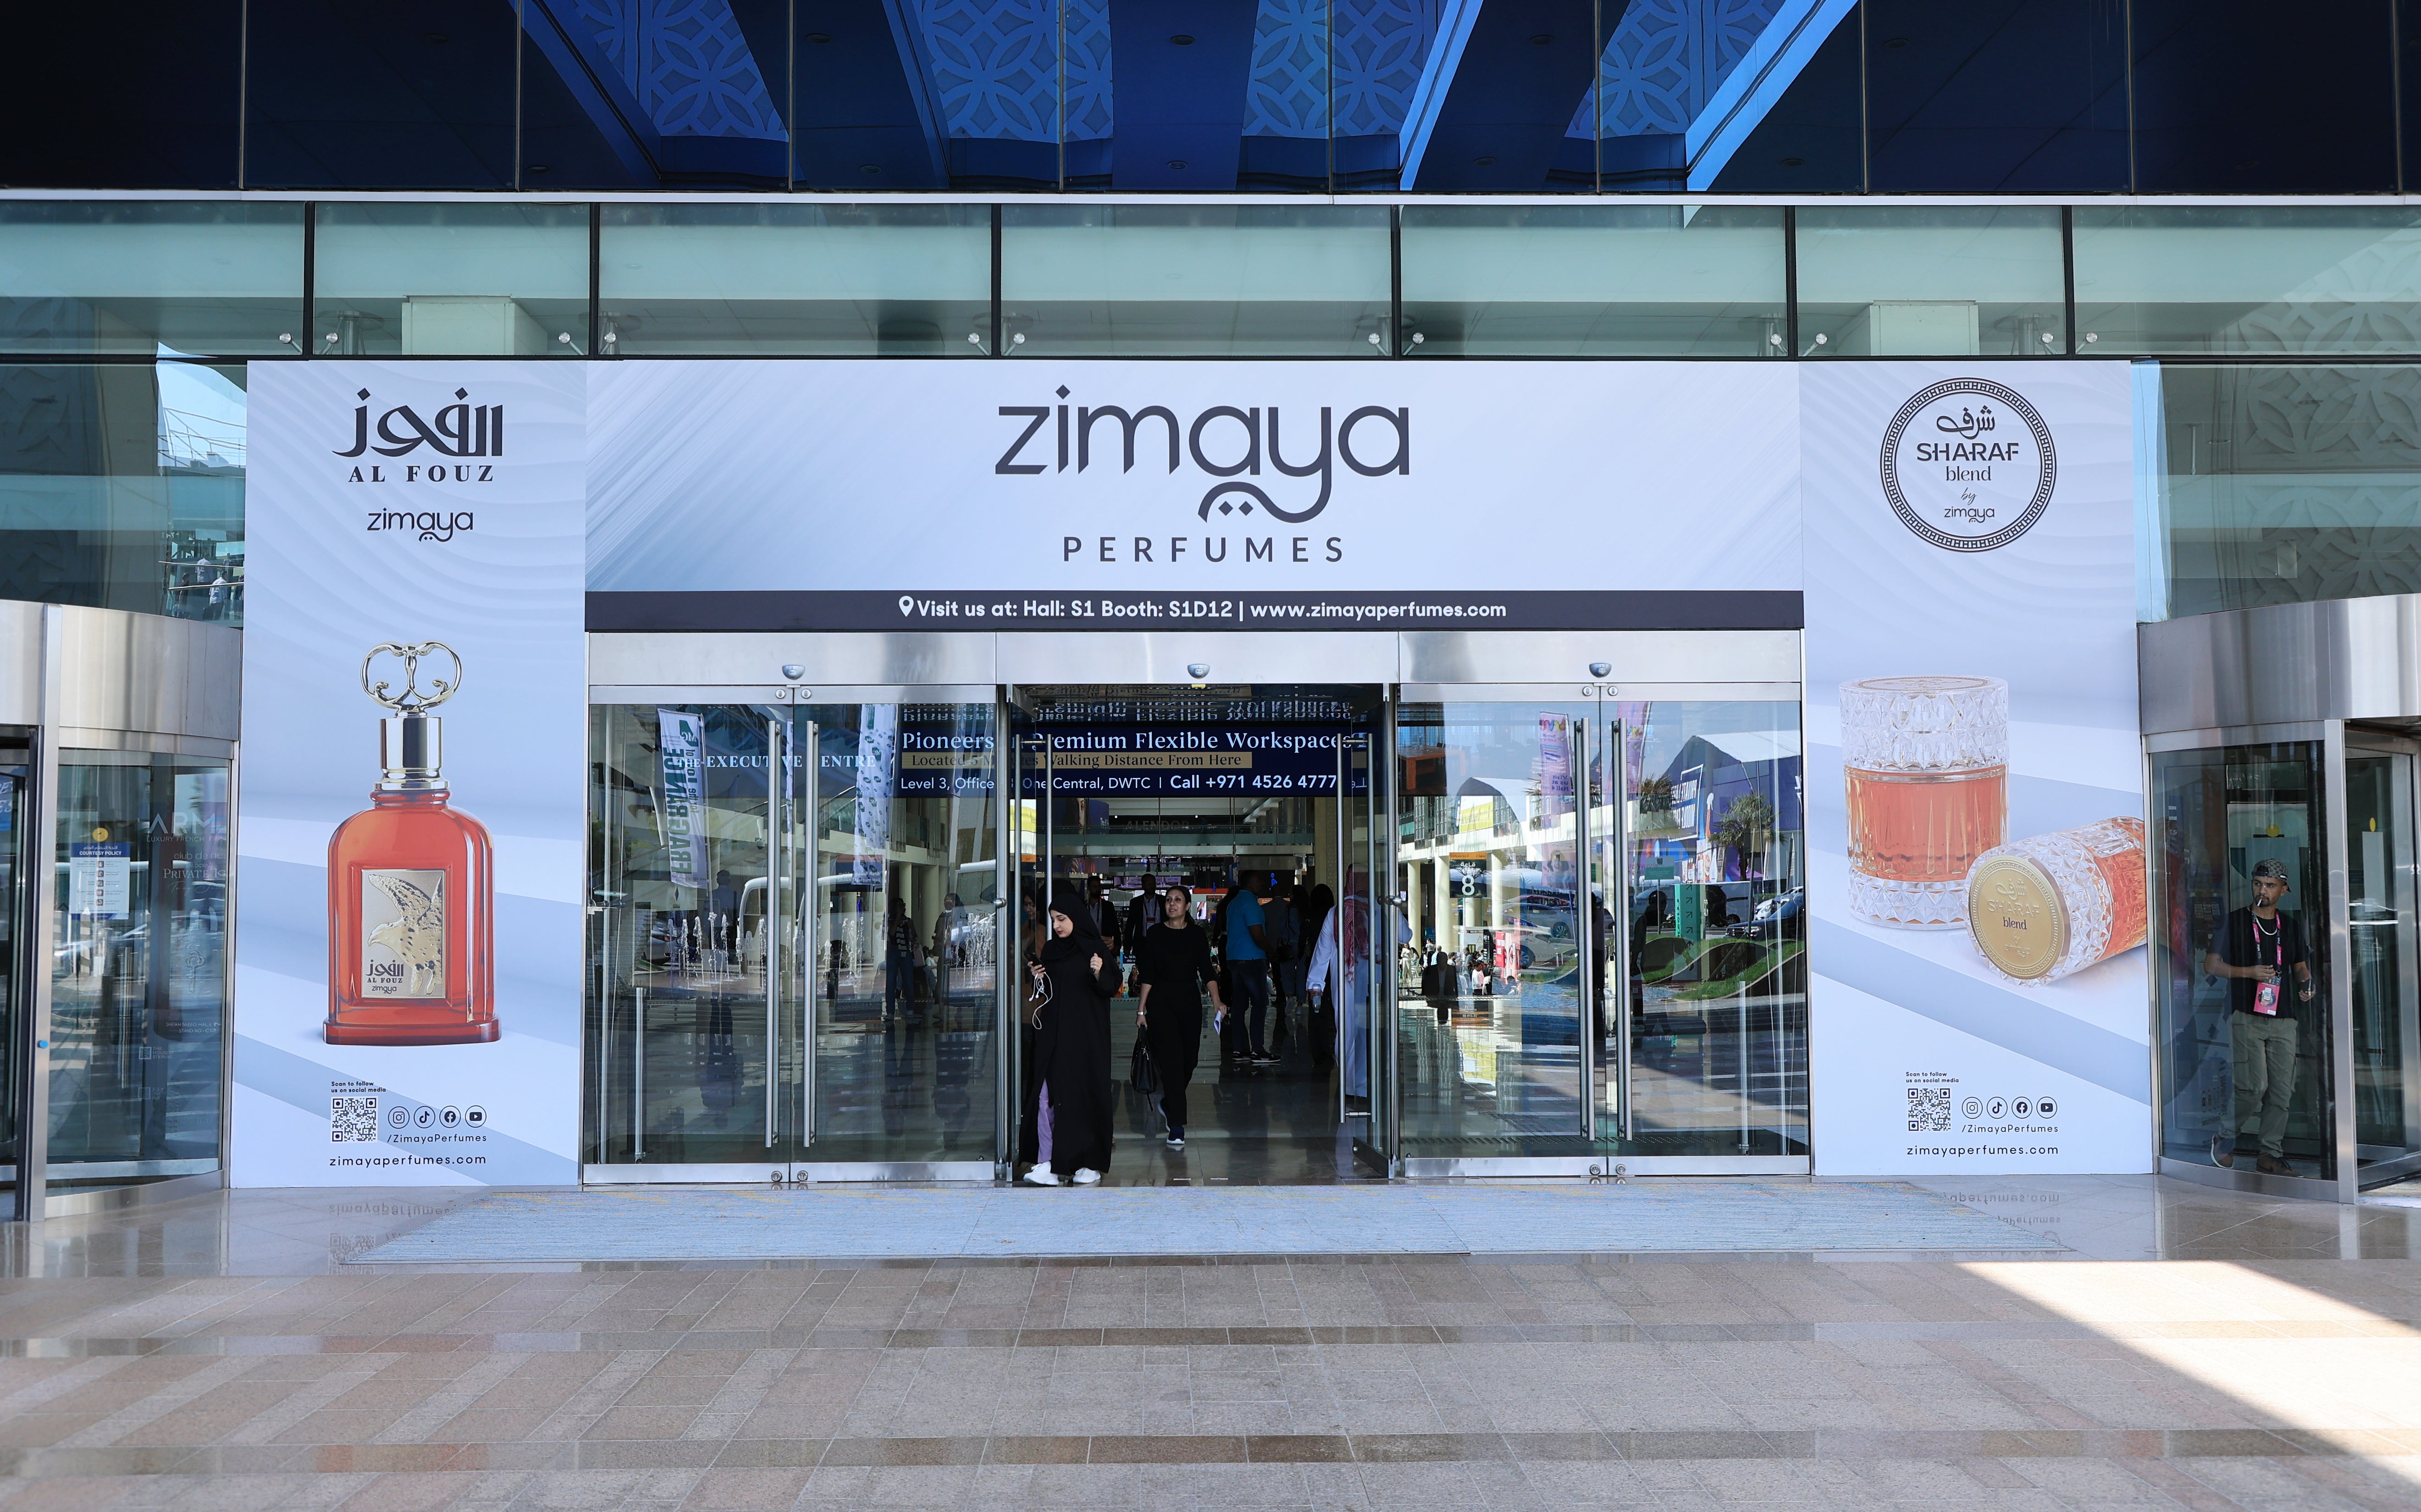 Zimaya perfumes branding at beautyworld exhibition